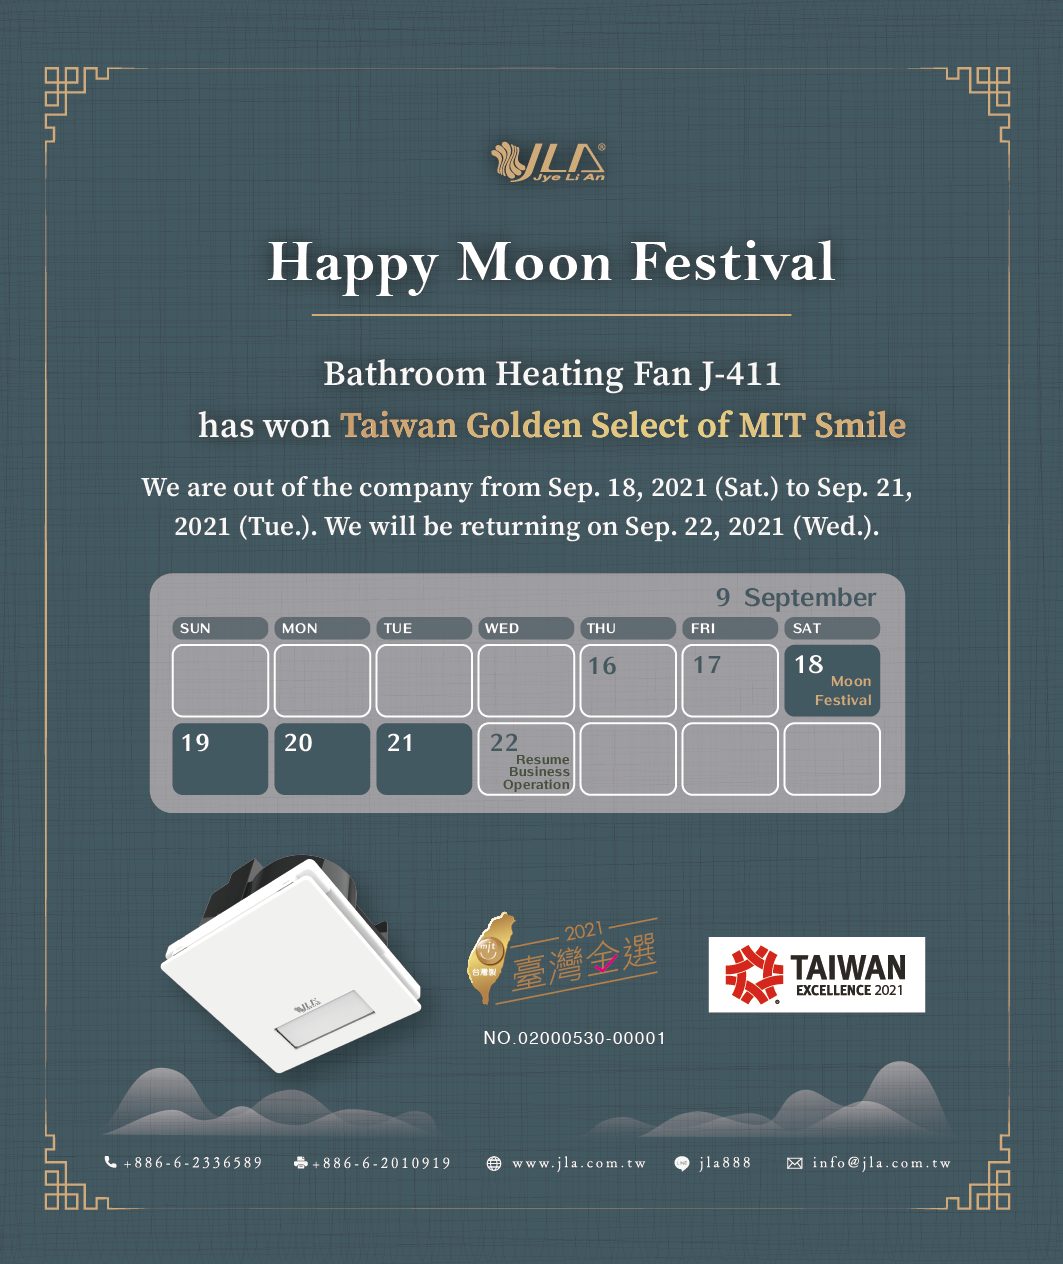 Happy Moon Festival 2021!